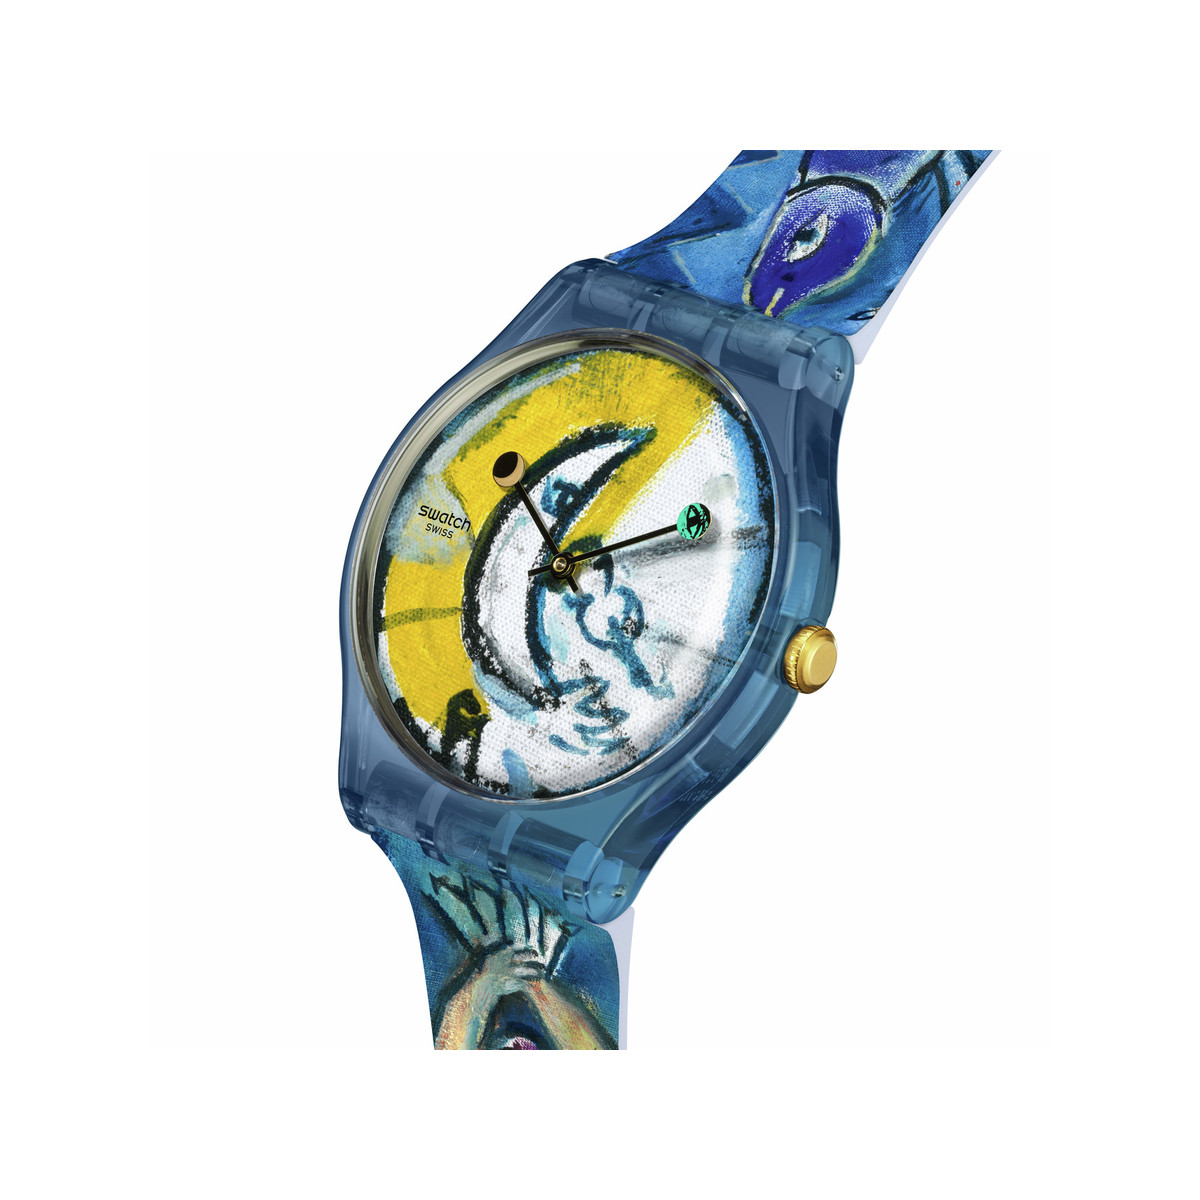 Montre SWATCH New gent bioceramic Chagall's blue circus homme bracelet silicone bleu - vue 2